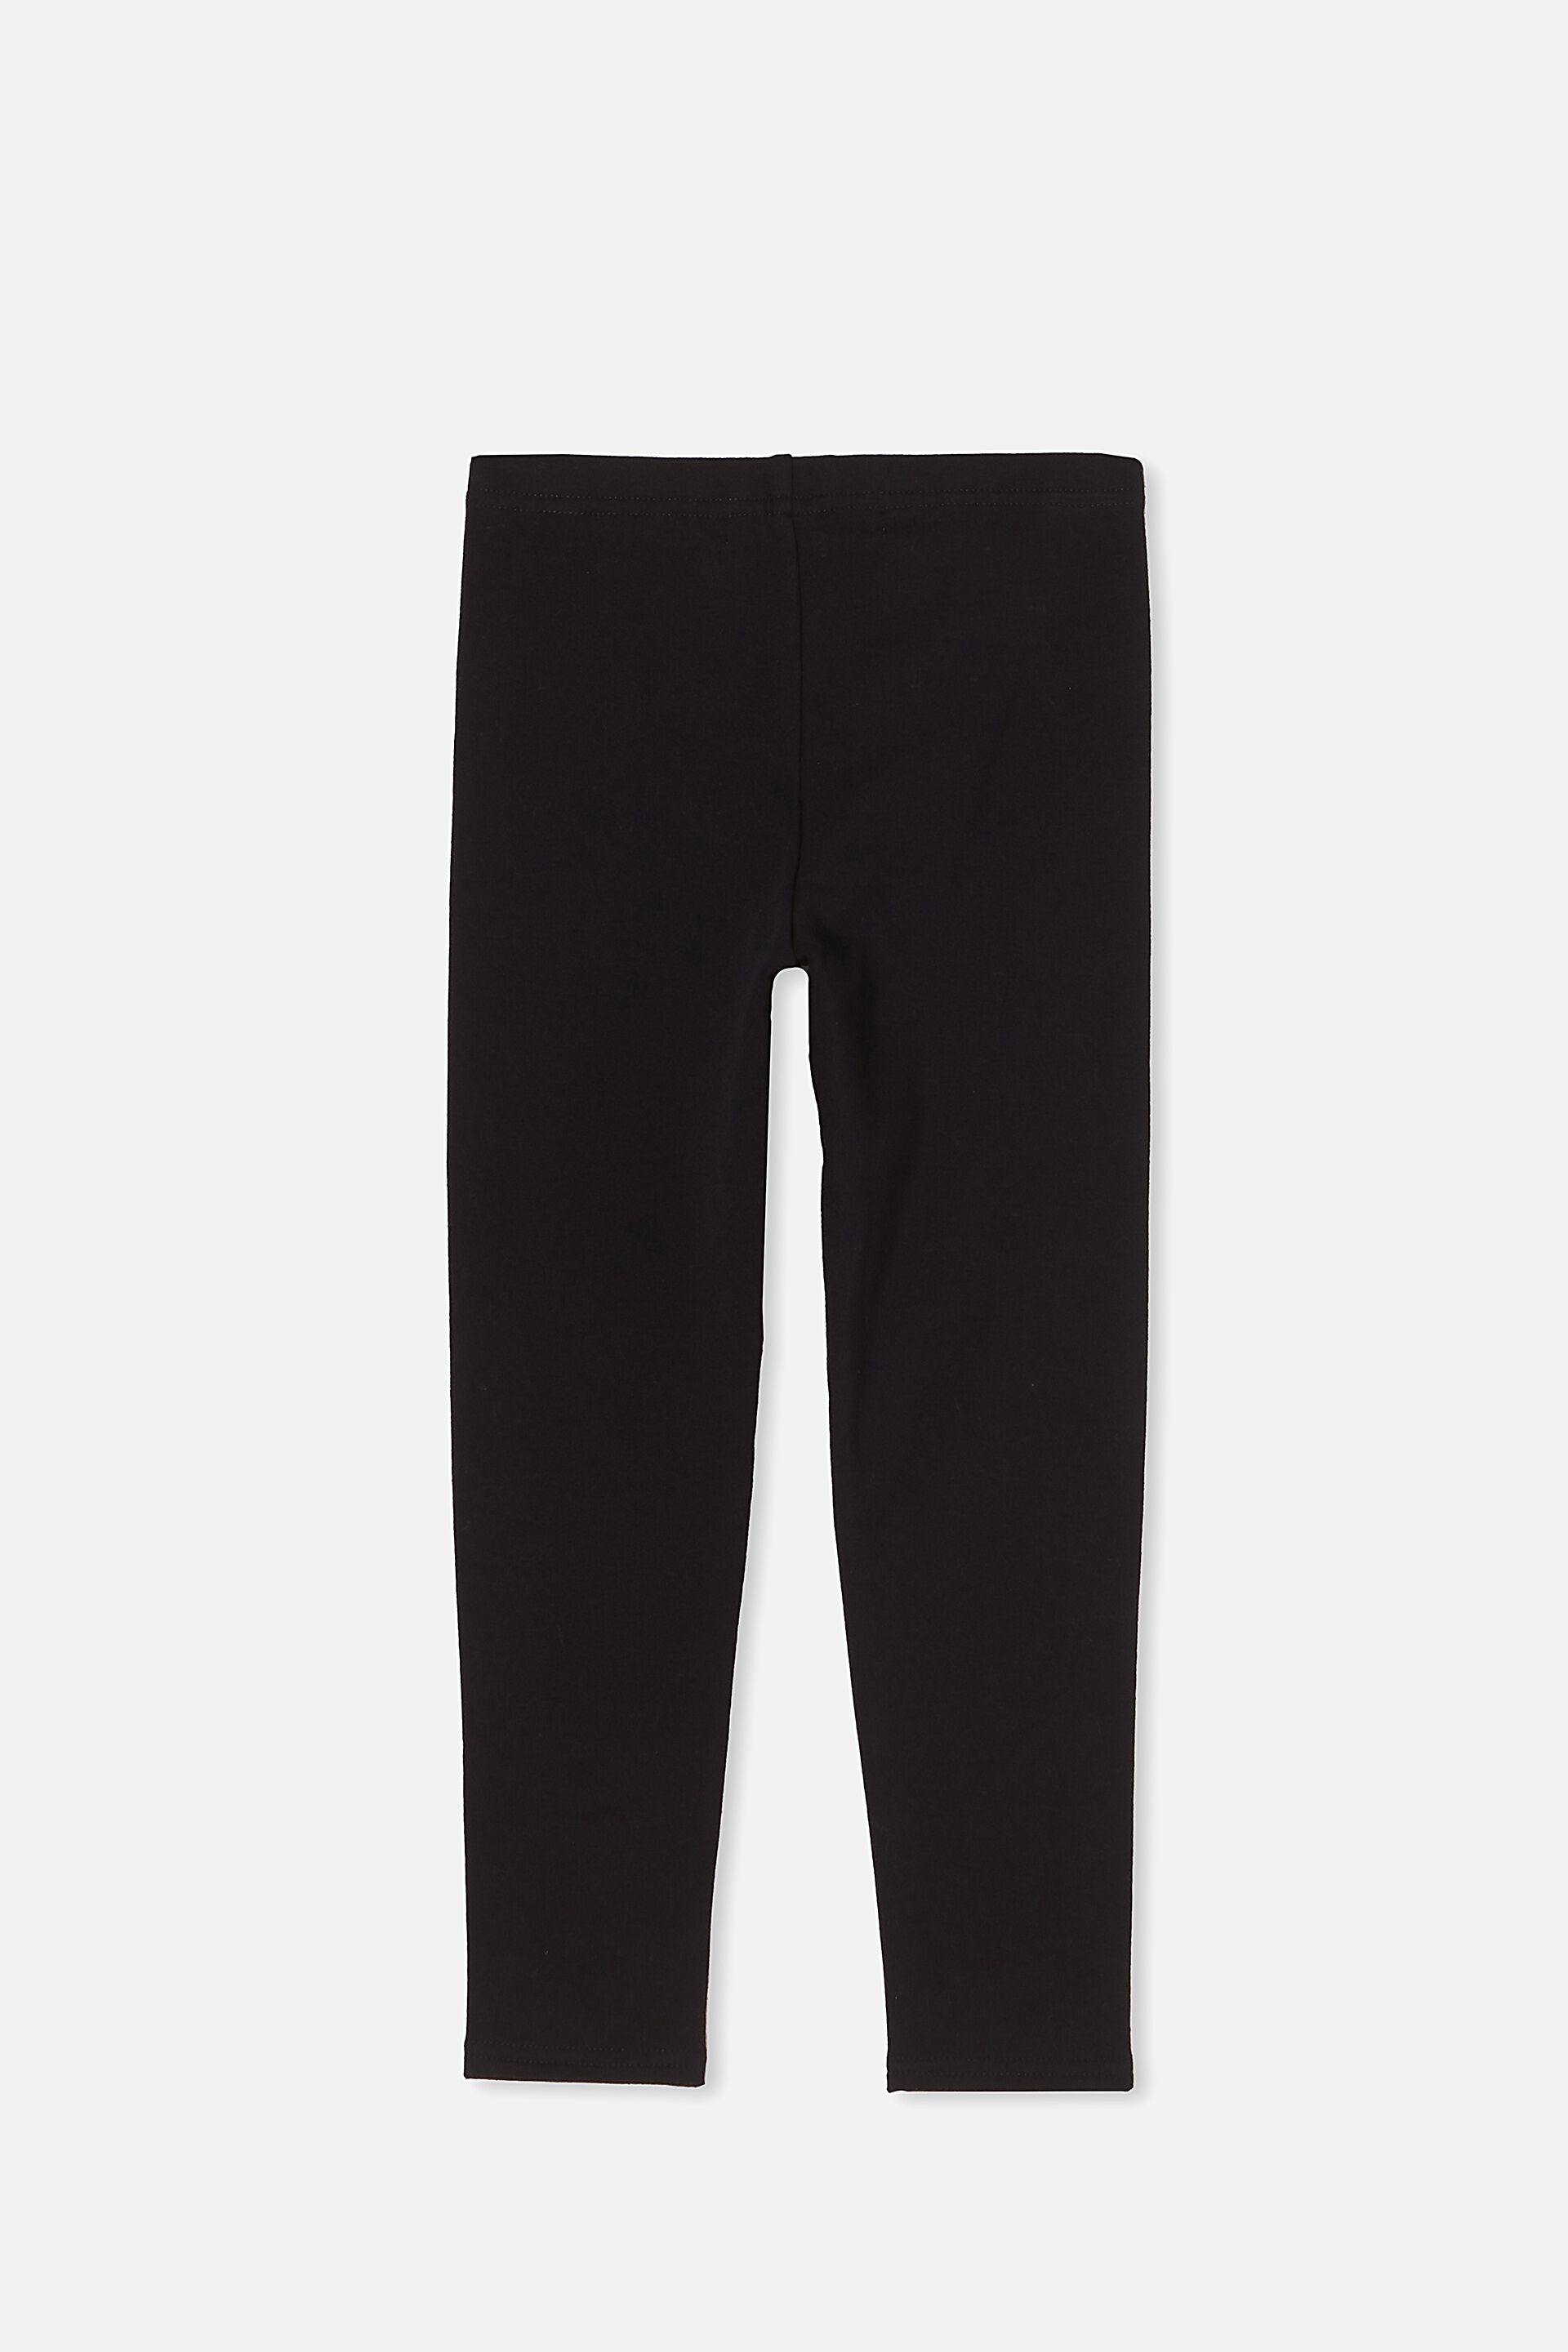 Women 19Colors Fleece PU Leggings Faux Leather Slim Shiny Skinny Pants  Trousers | eBay